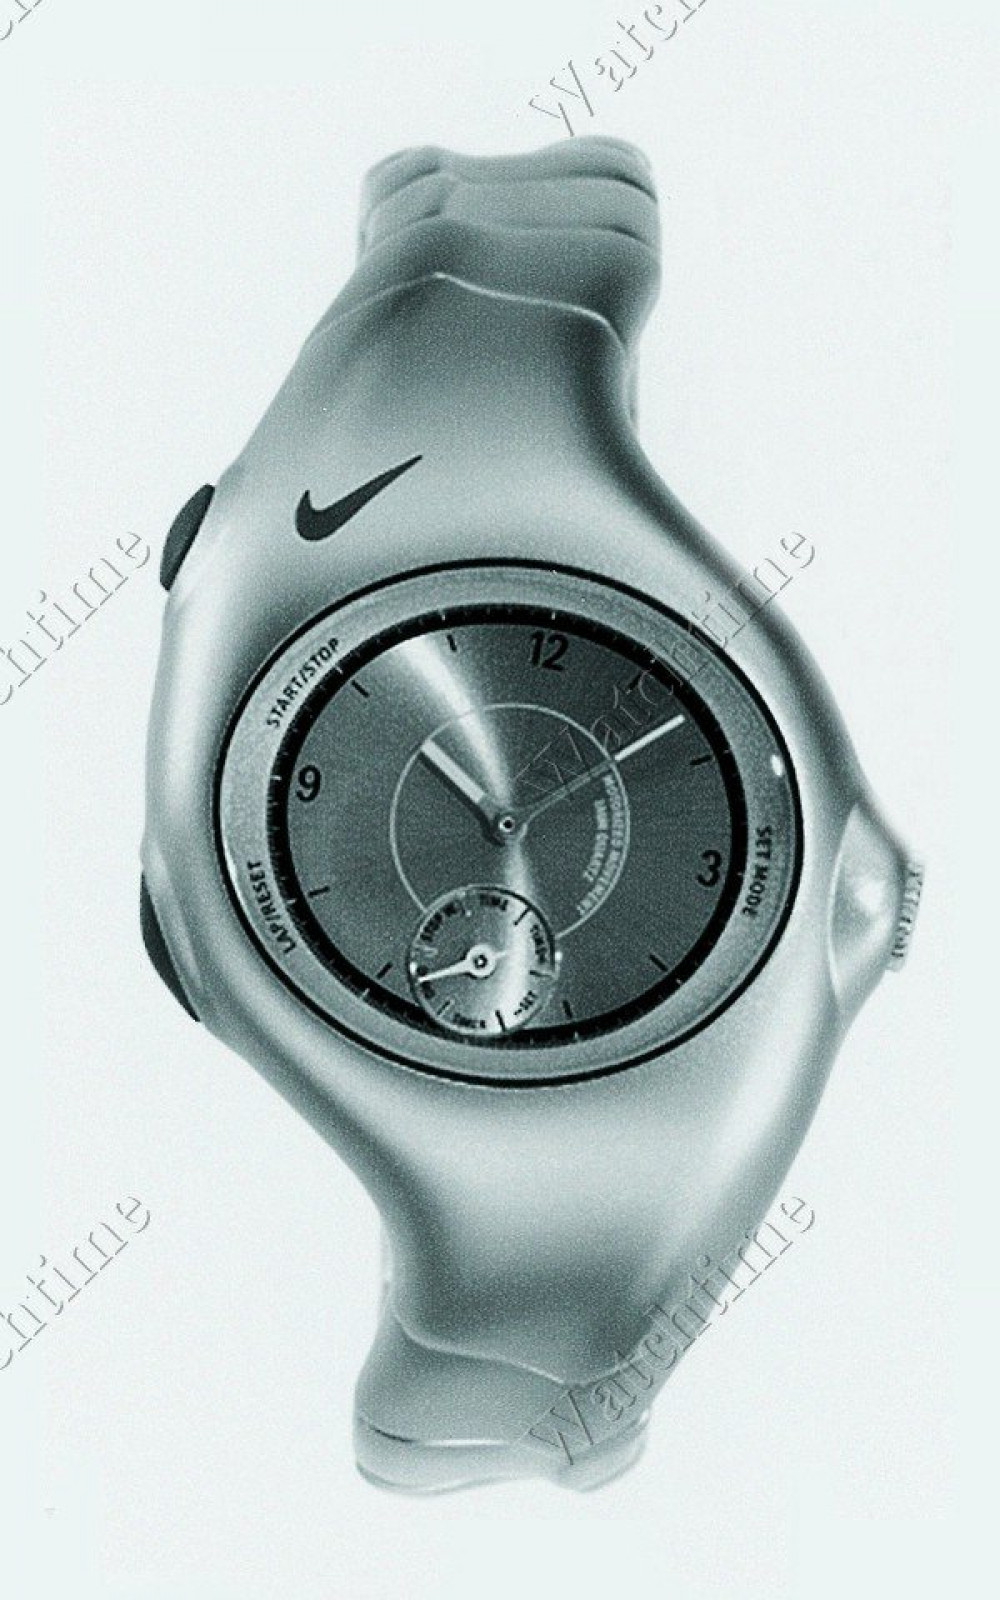 Zegarek firmy Nike, model Nike Triax Armored Regular